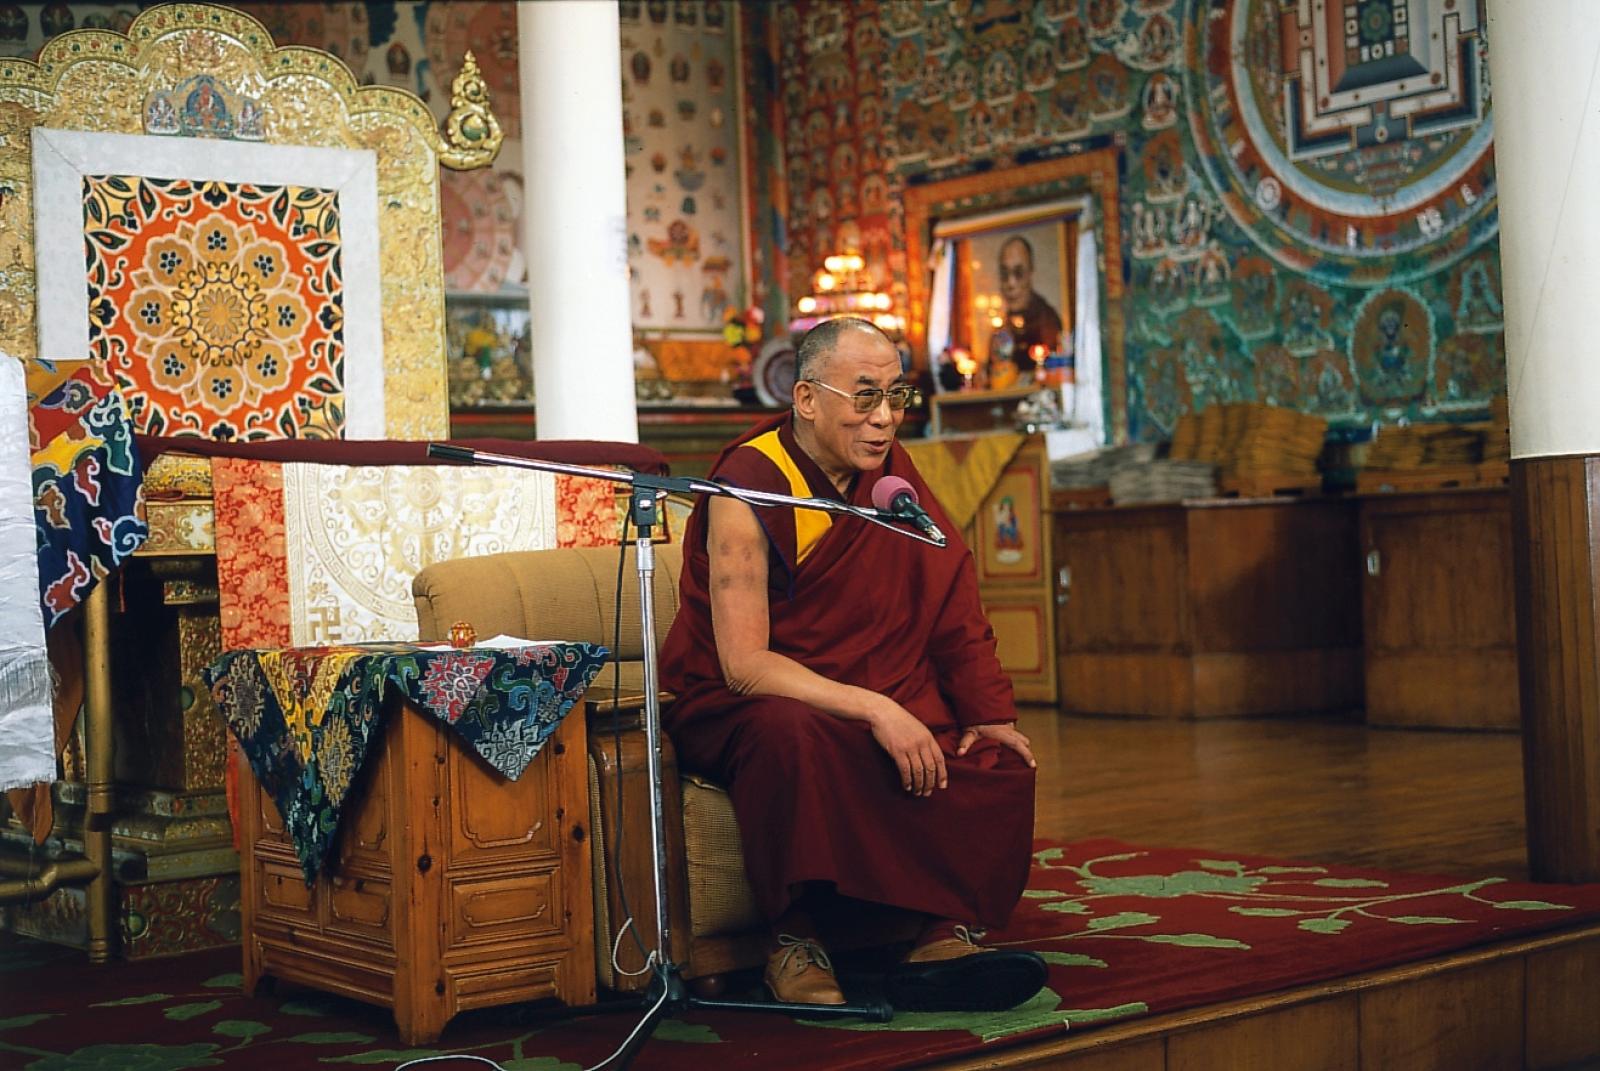 The Daila Lama speaks